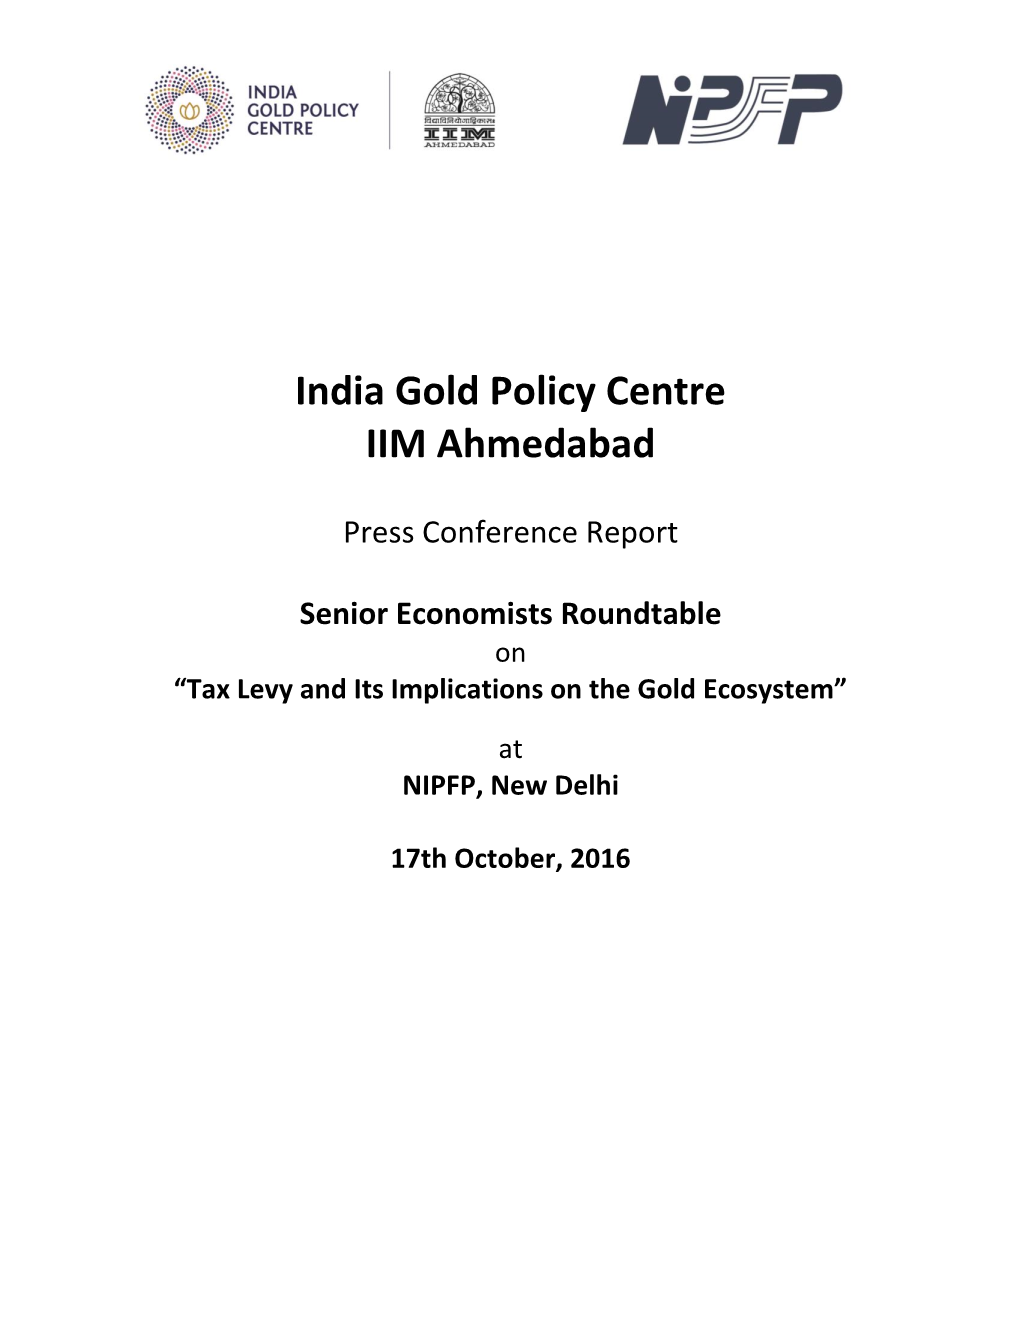 India Gold Policy Centre IIM Ahmedabad